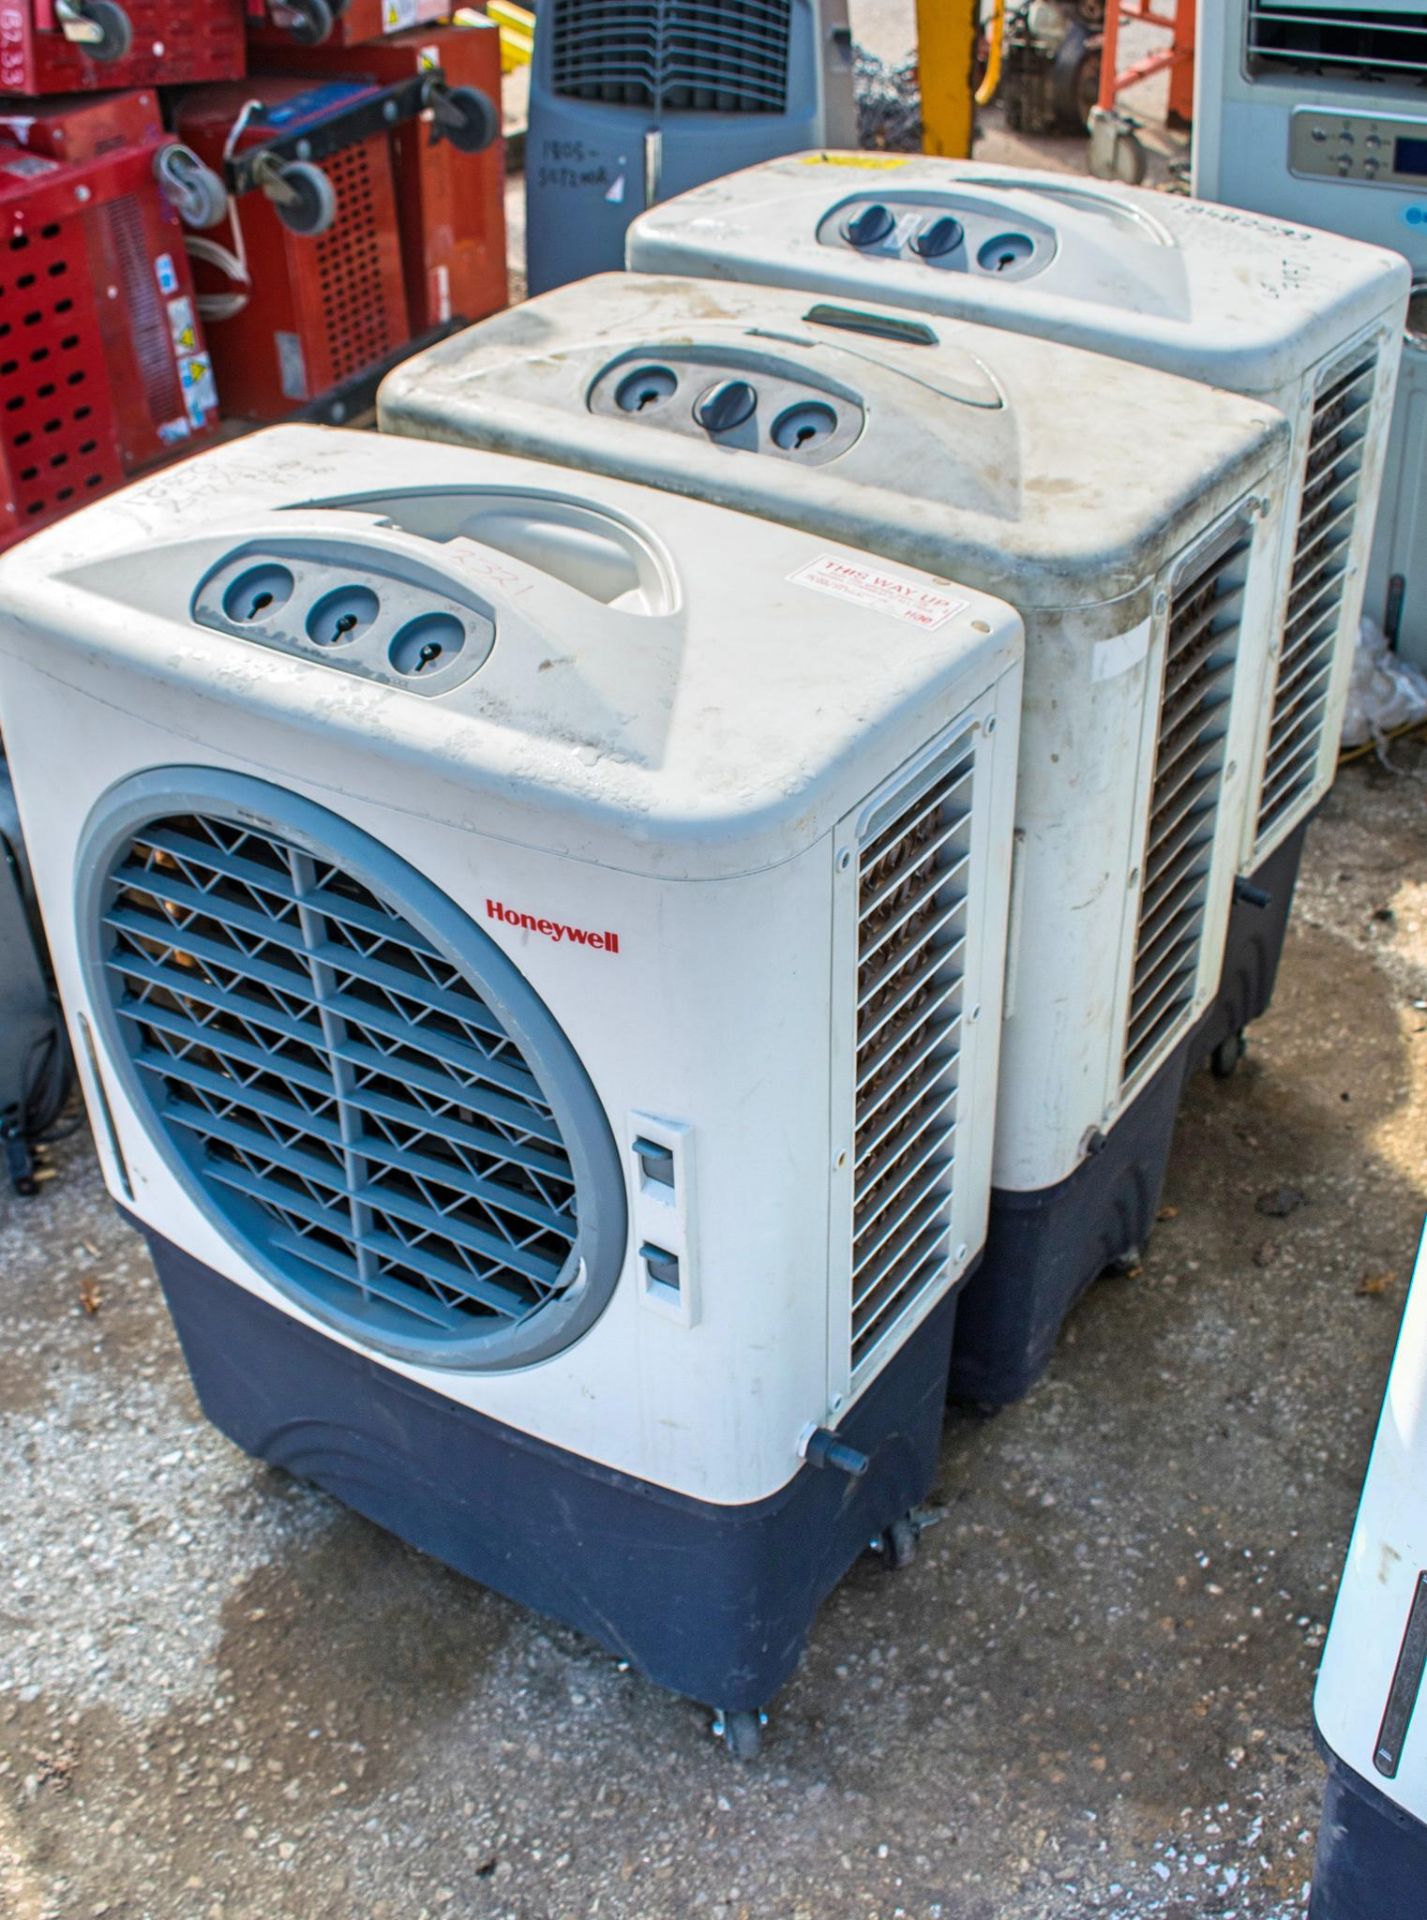 3 - Honeywell air conditioning units